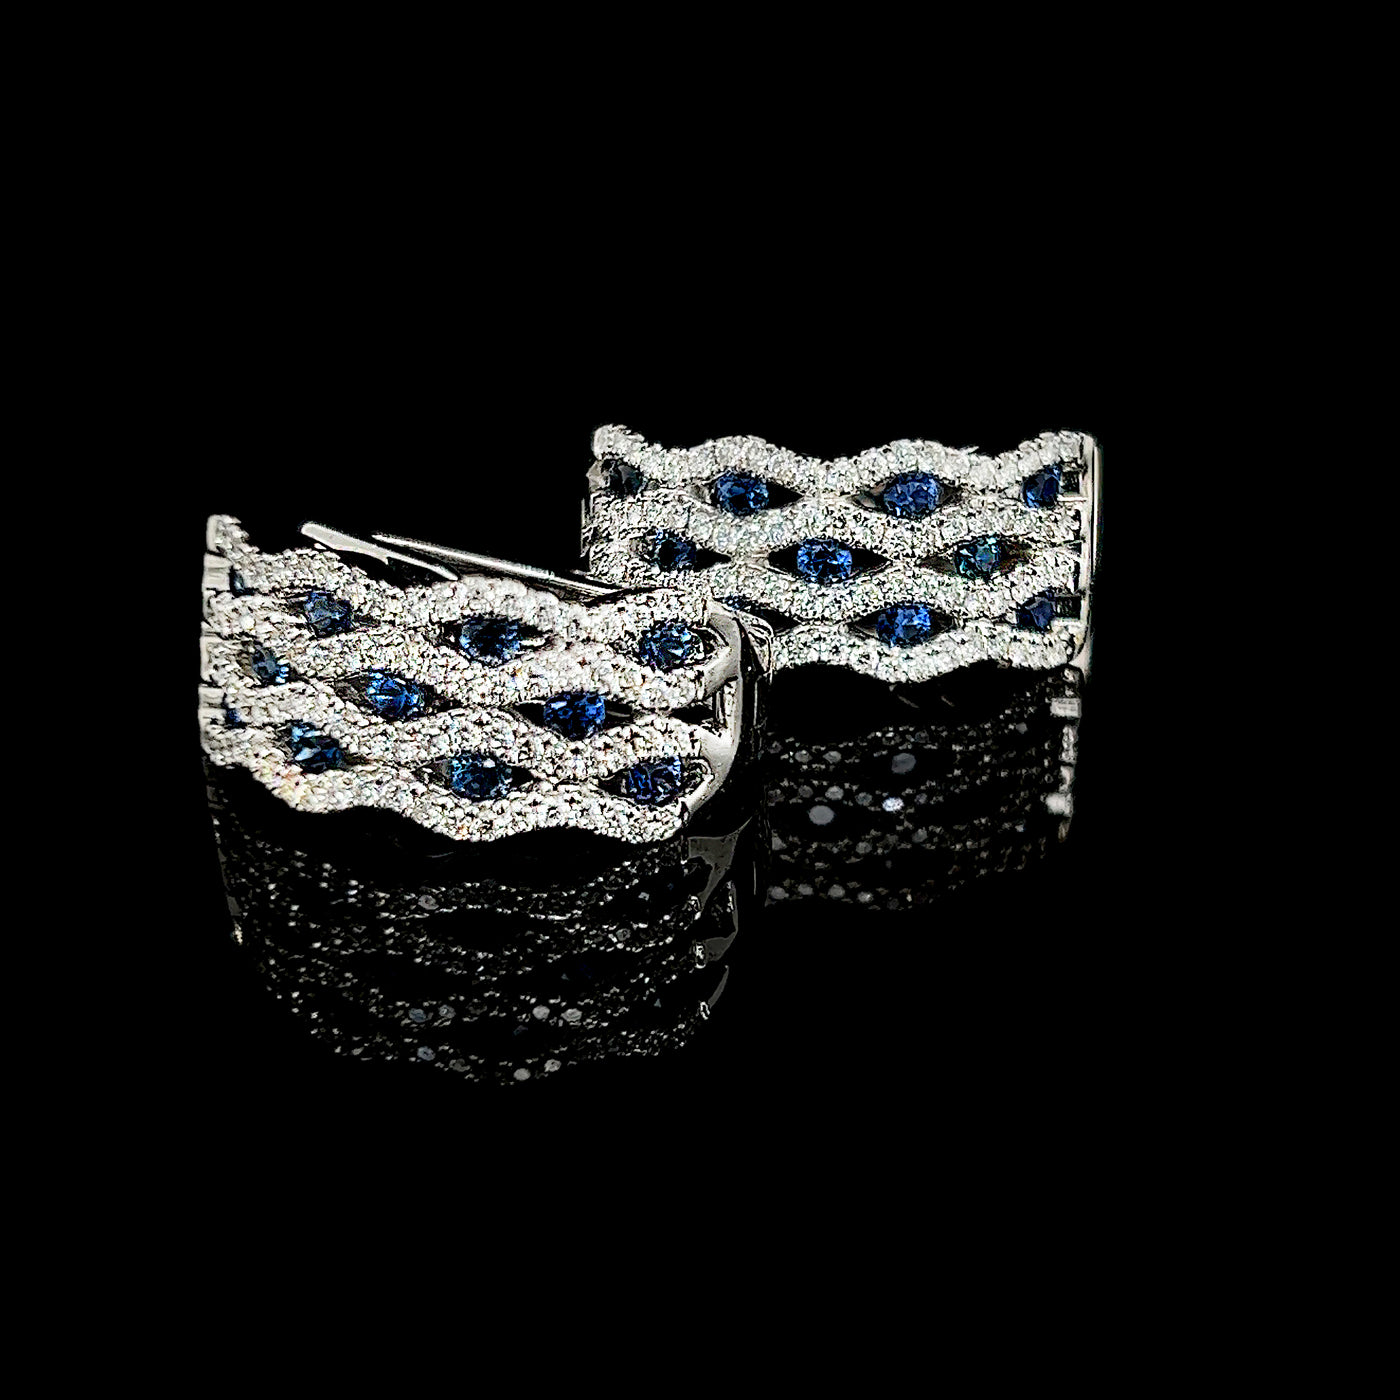 White Gold Sapphire & Diamond Earrings